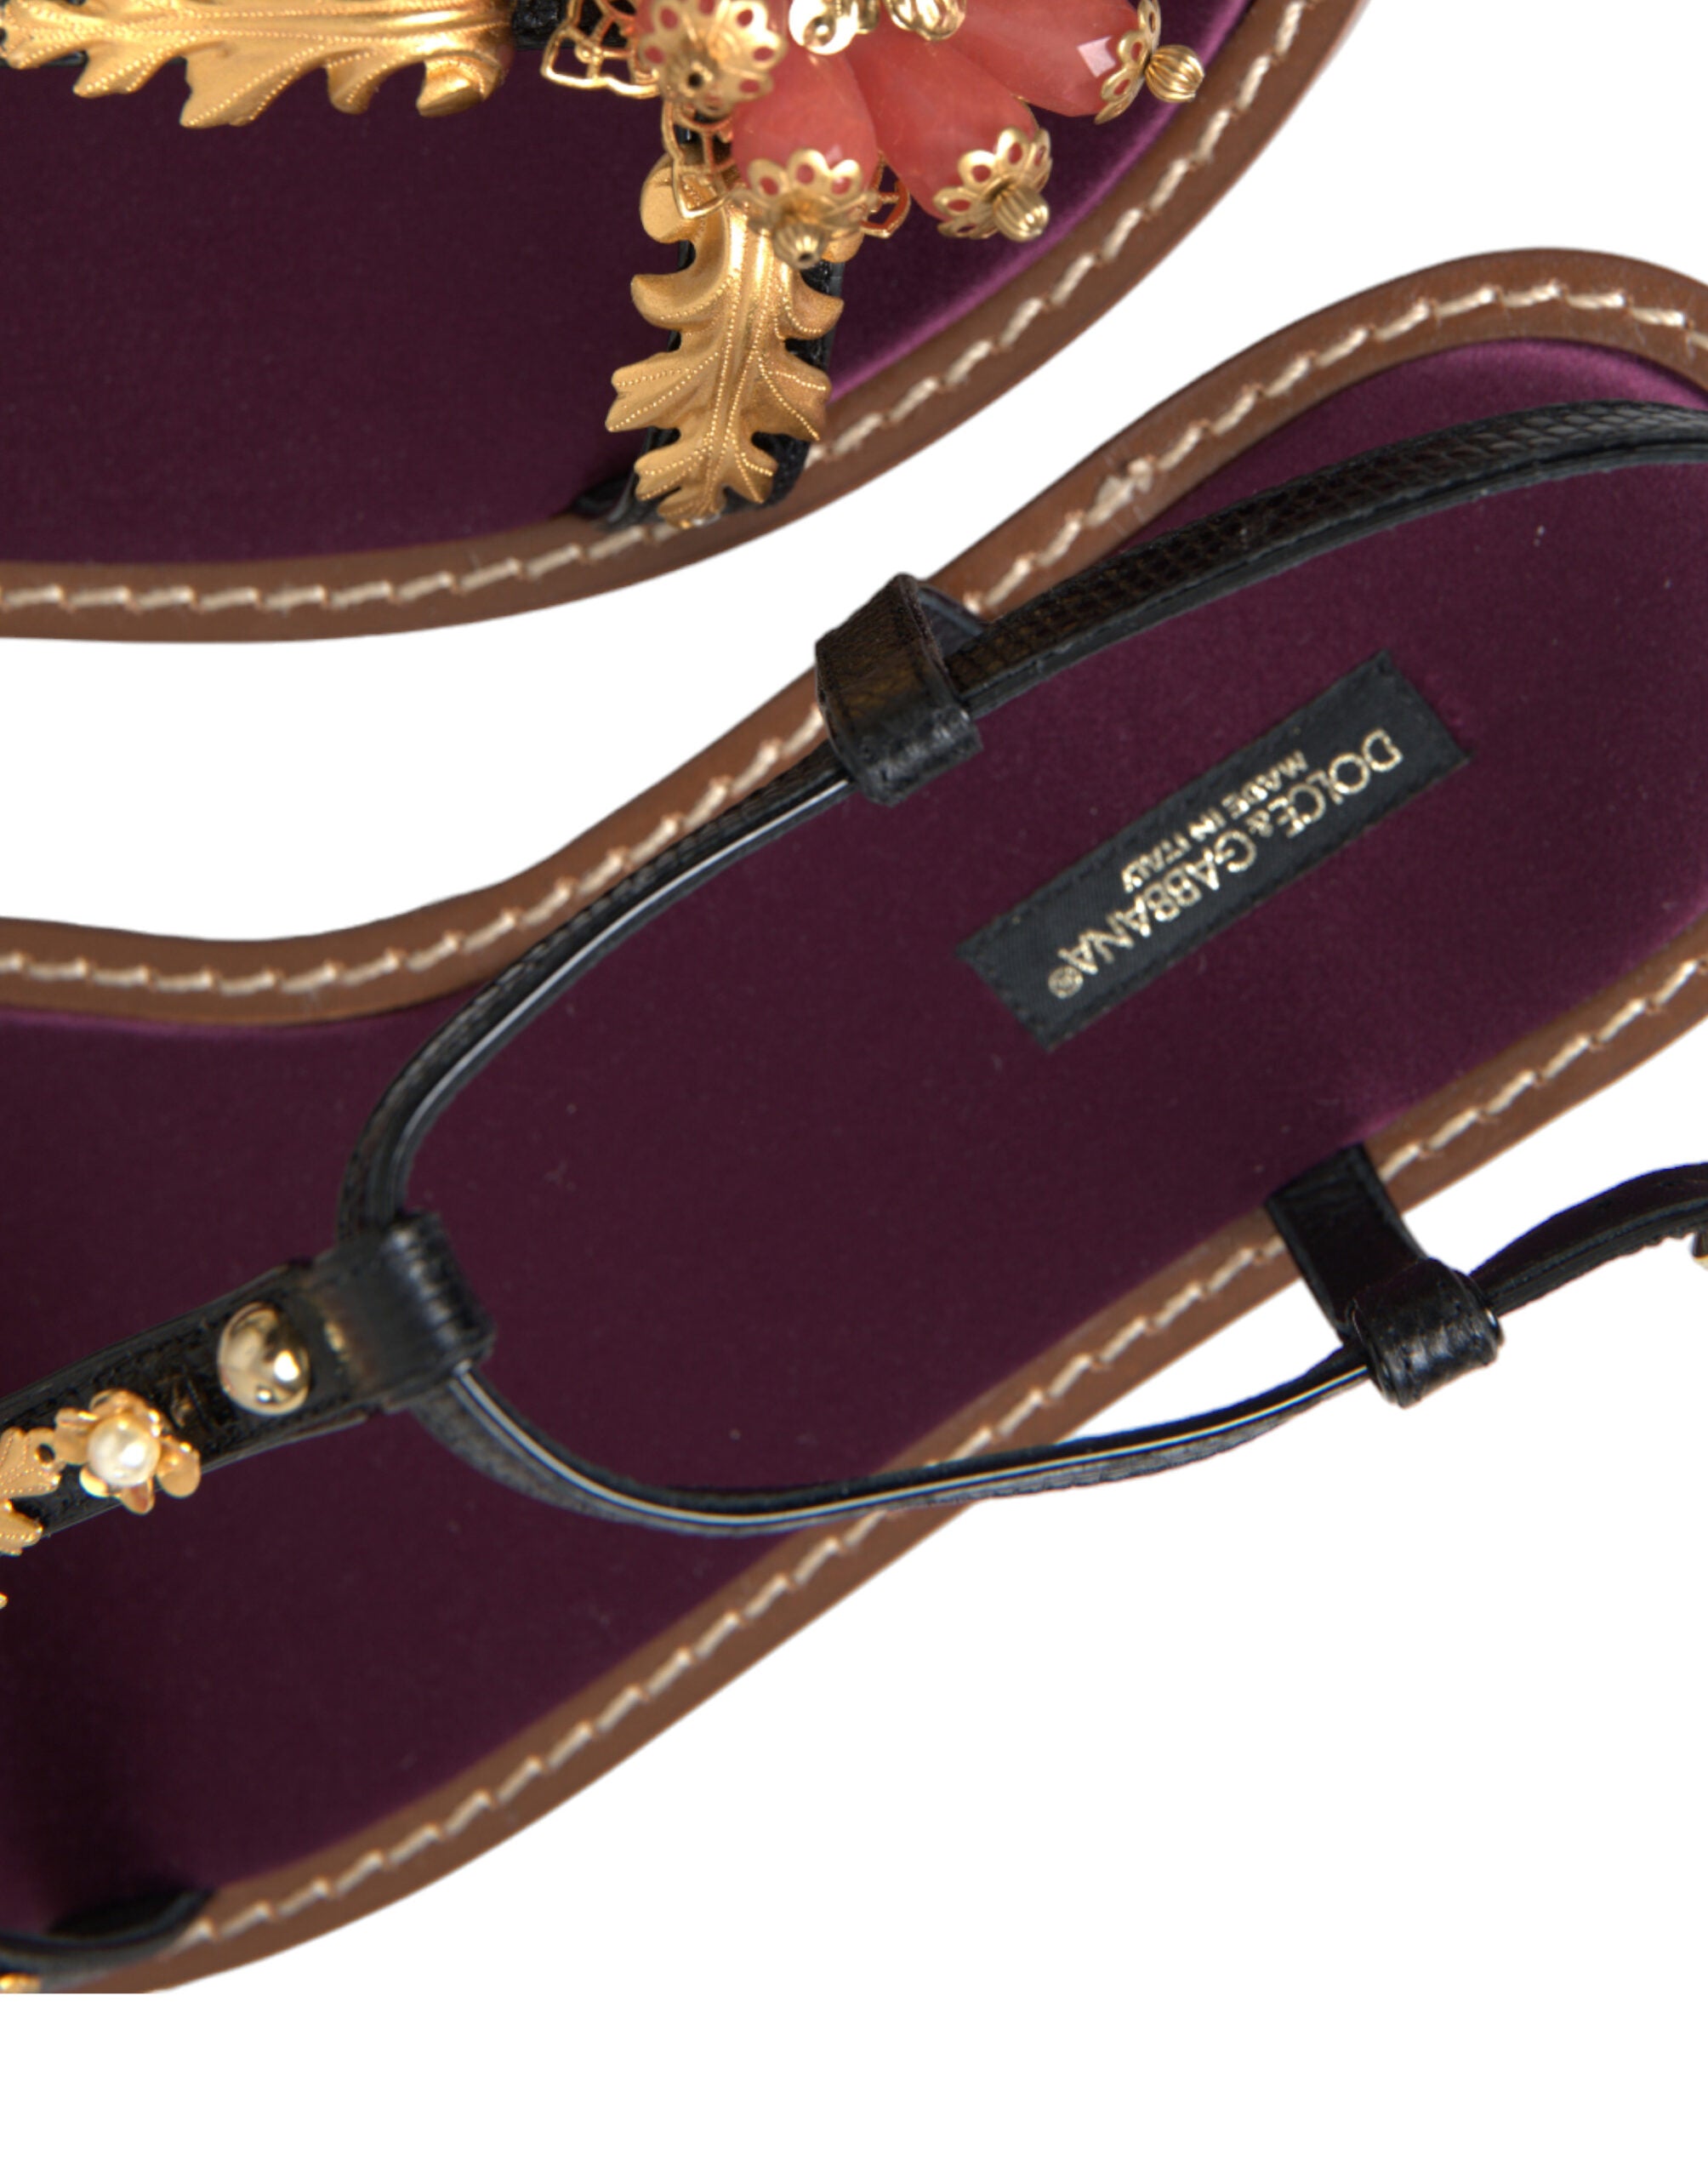 Dolce & Gabbana Elegantes sandalias planas adornadas con cristales